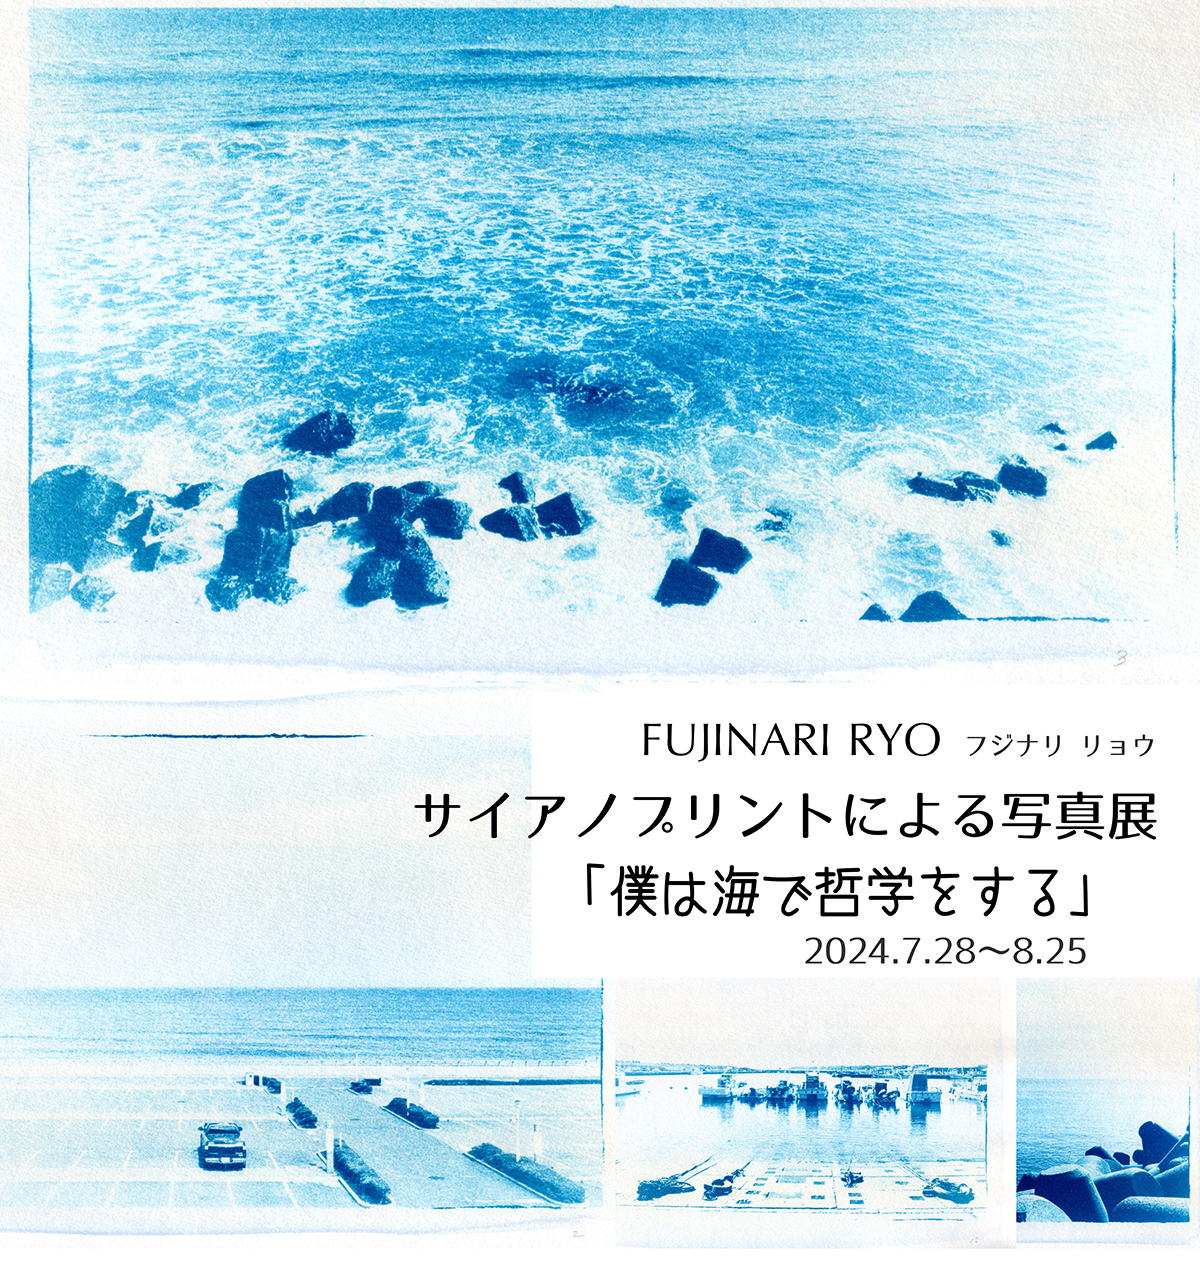 FUJINARI RYO写真展「僕は海で哲学をする」をギャラリーにて開催